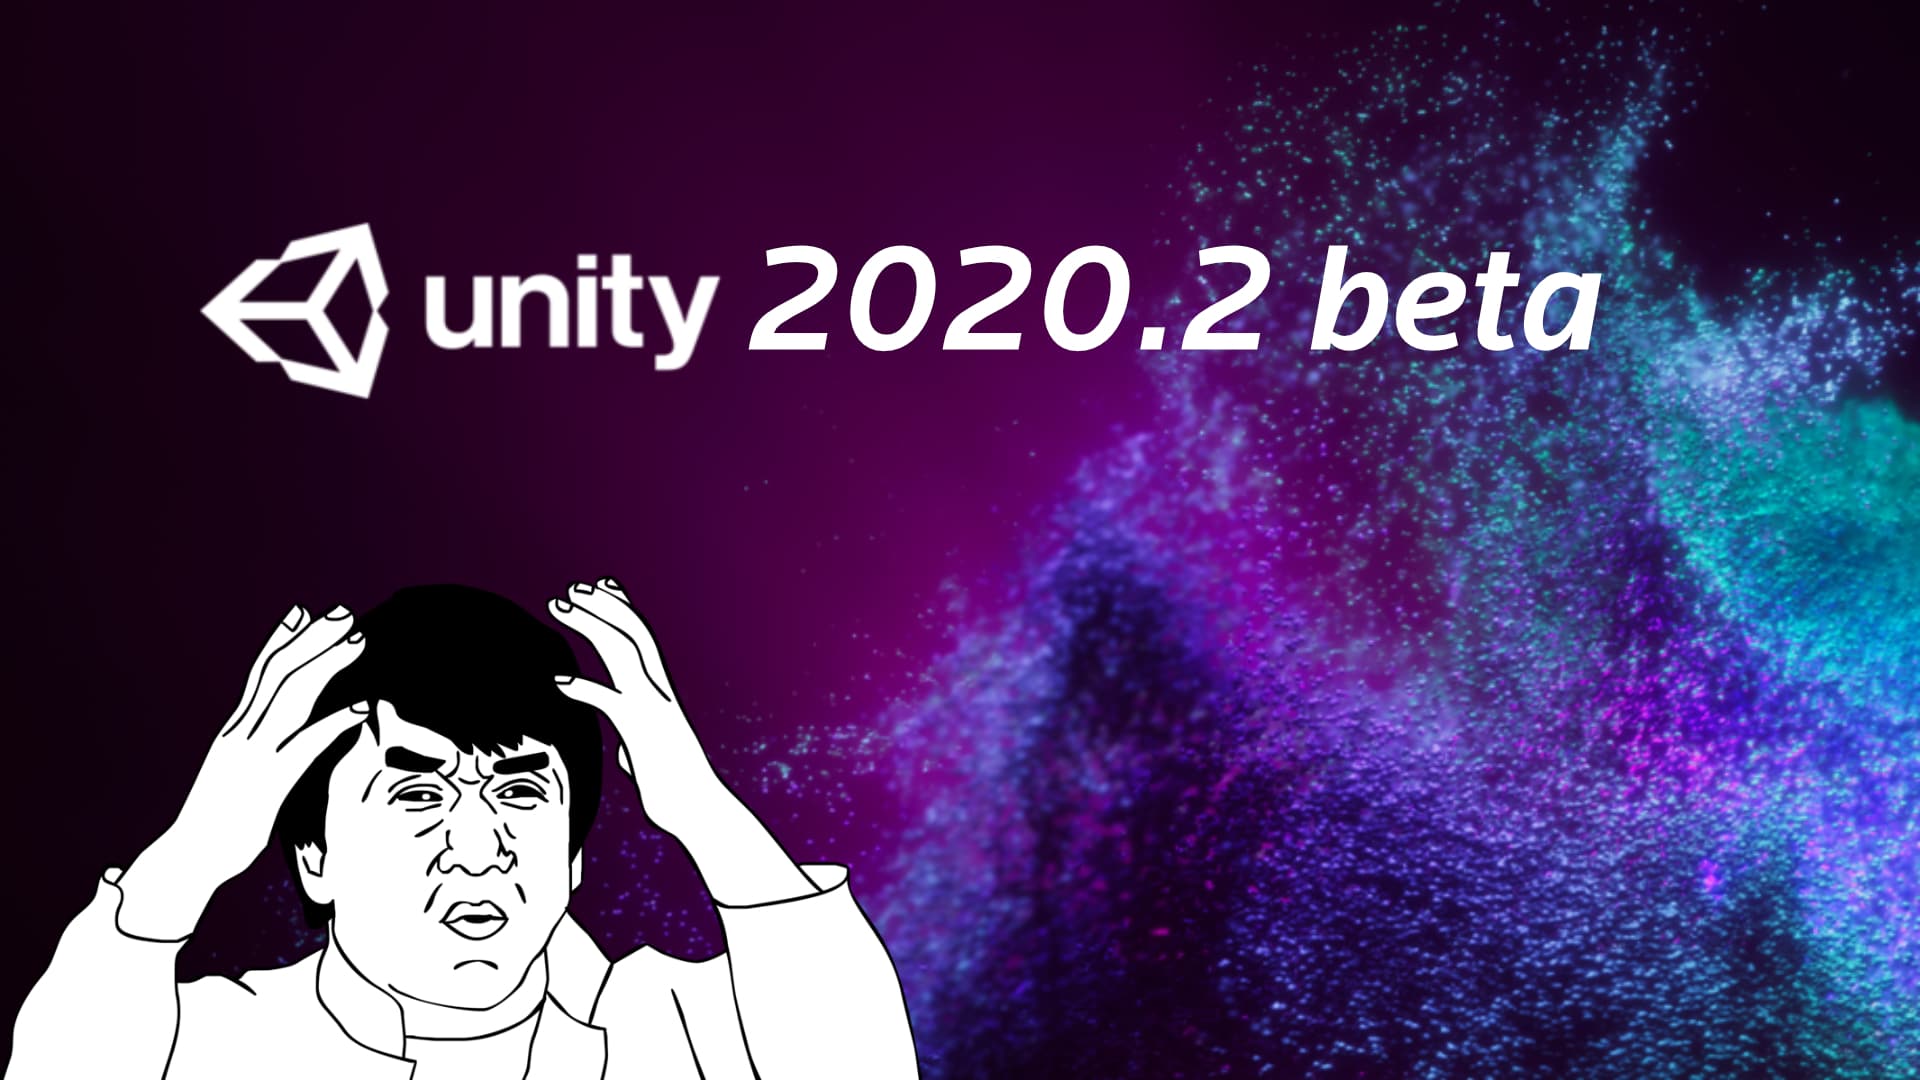 latest unity version 2020